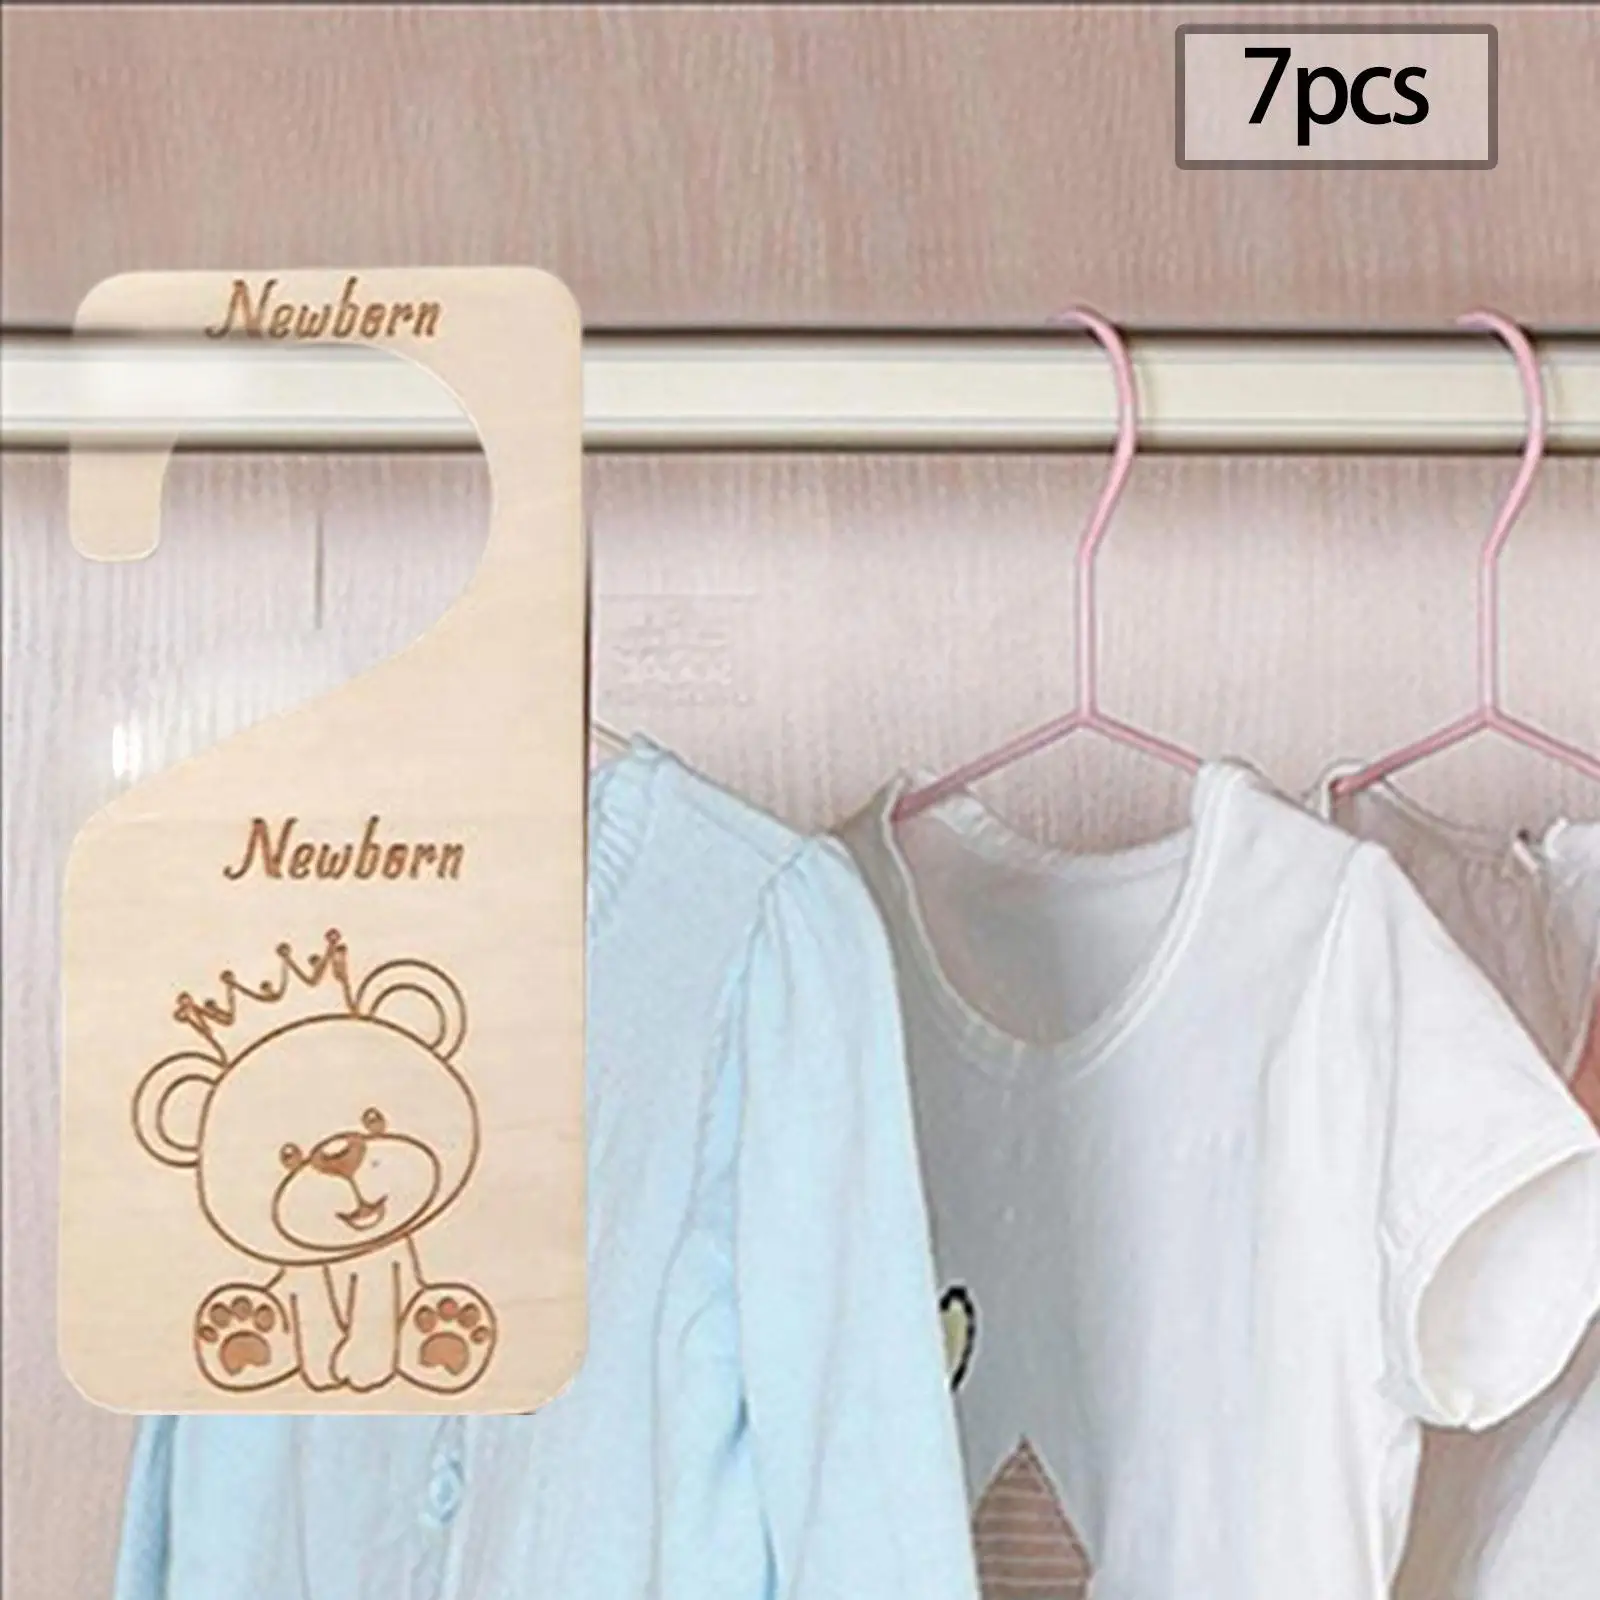 7Pcs Newborn Baby Toddler Clothes Dividers Nursery Clothes Organizers Hanging Clothes Dividers for Closet Wardrobe Bedroom